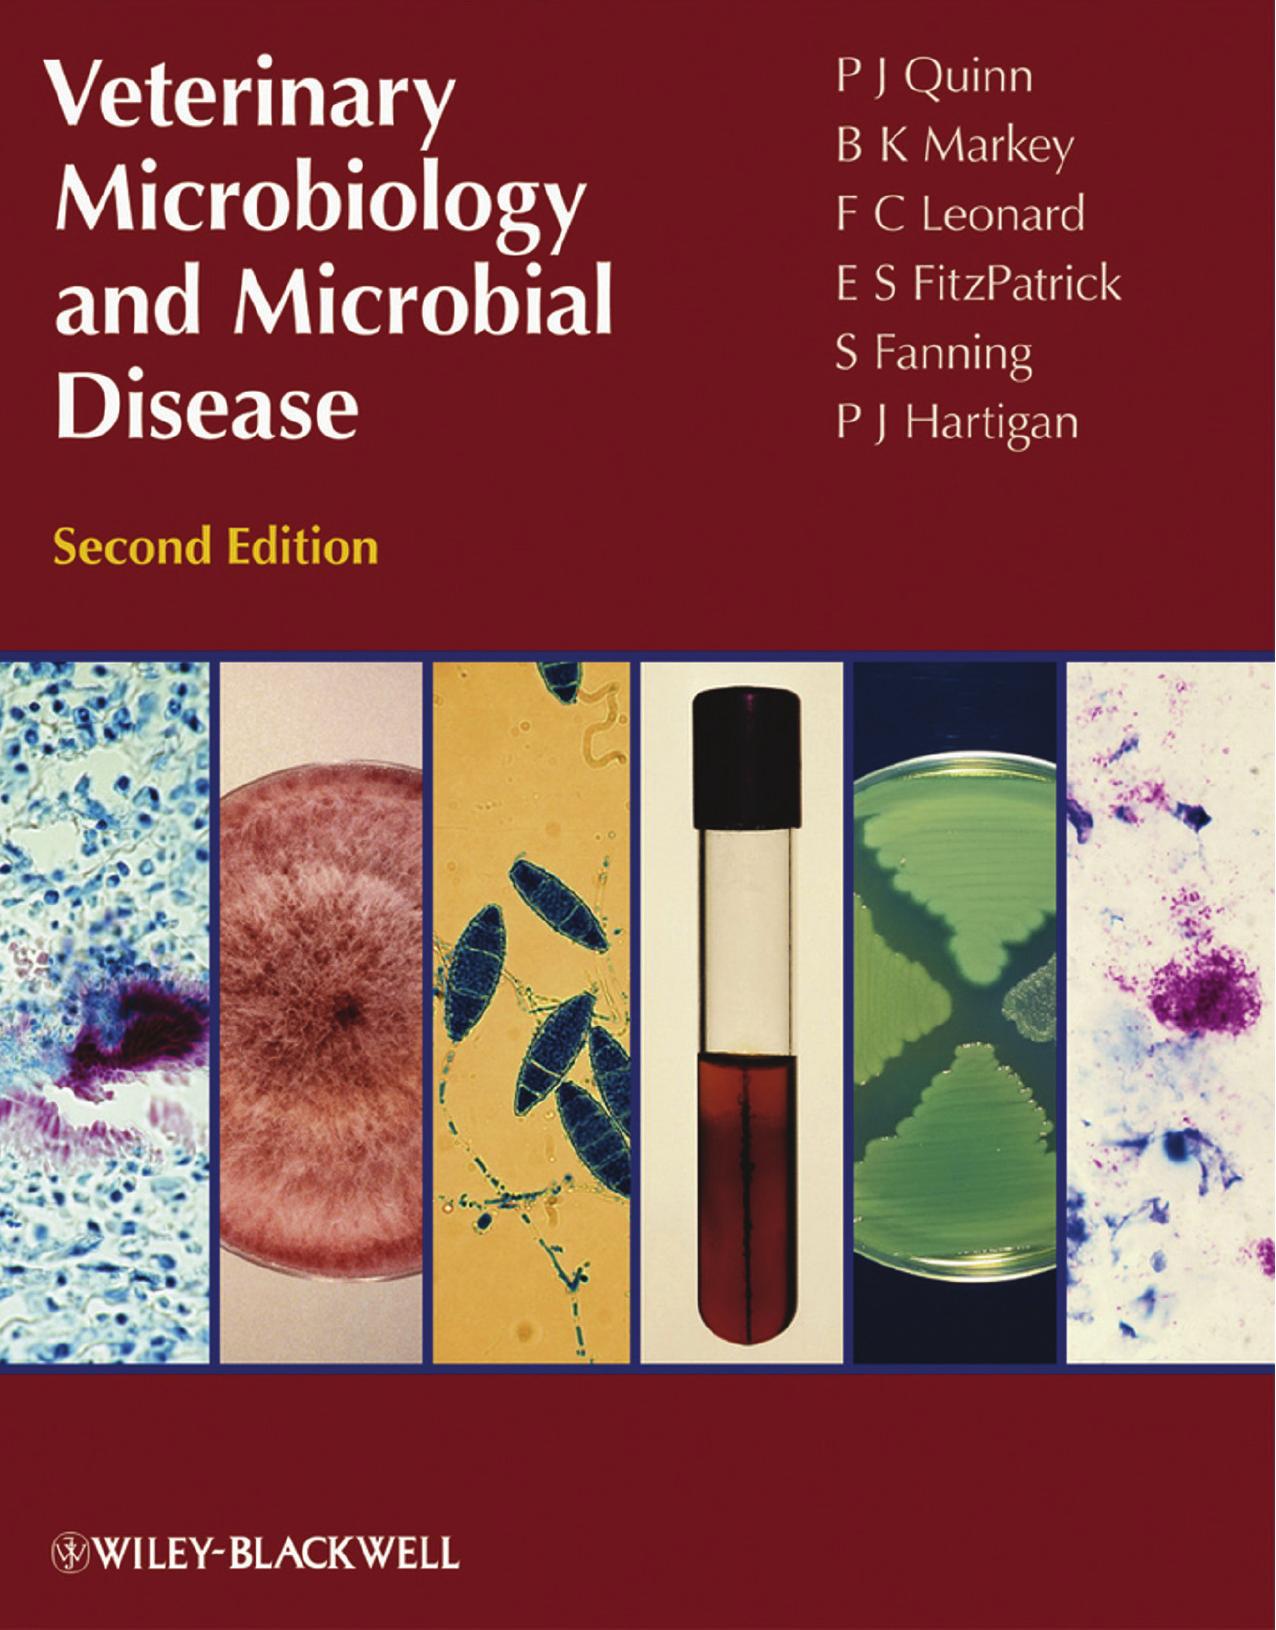 Veterinary Microbiology and Microbial Disease. by P.J. Quinn & B.K. Markey & F.C. Leonard & E.S. FitzPatrick & S. Fanning and P.J. Hartigan